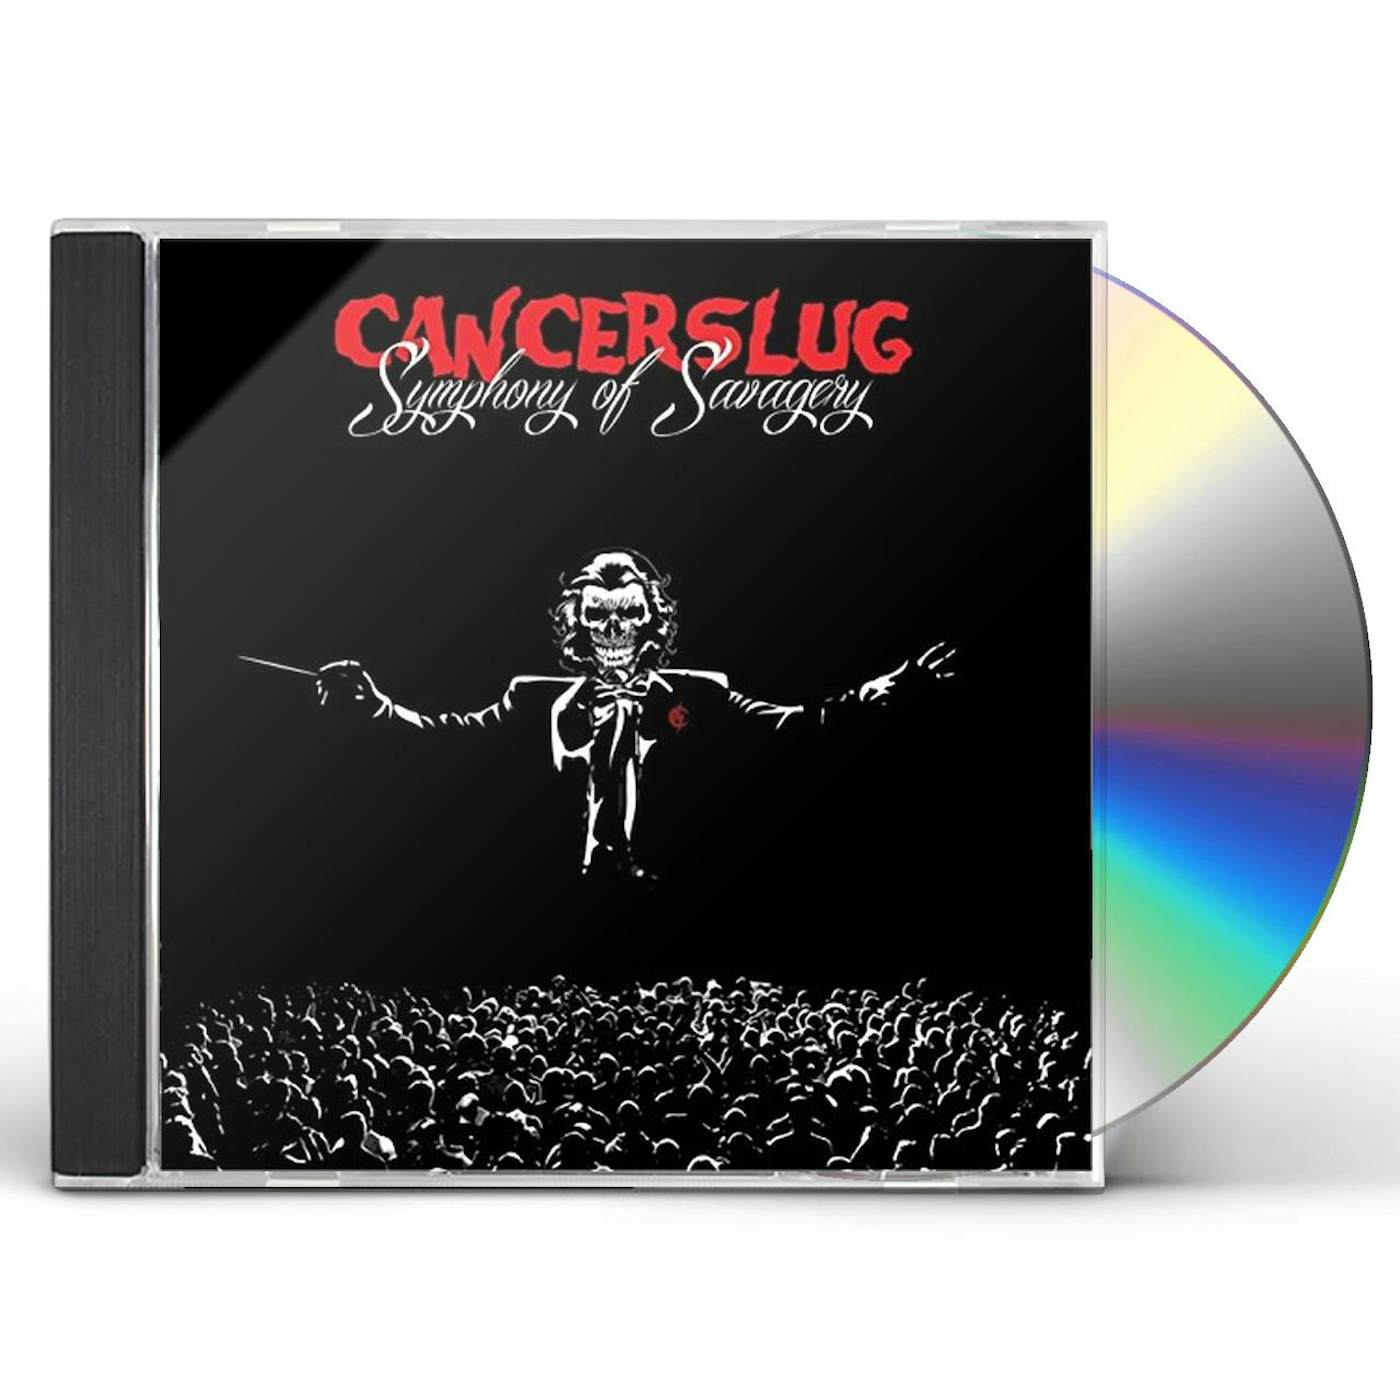 Cancerslug SYMPHONY OF SAVAGERY CD